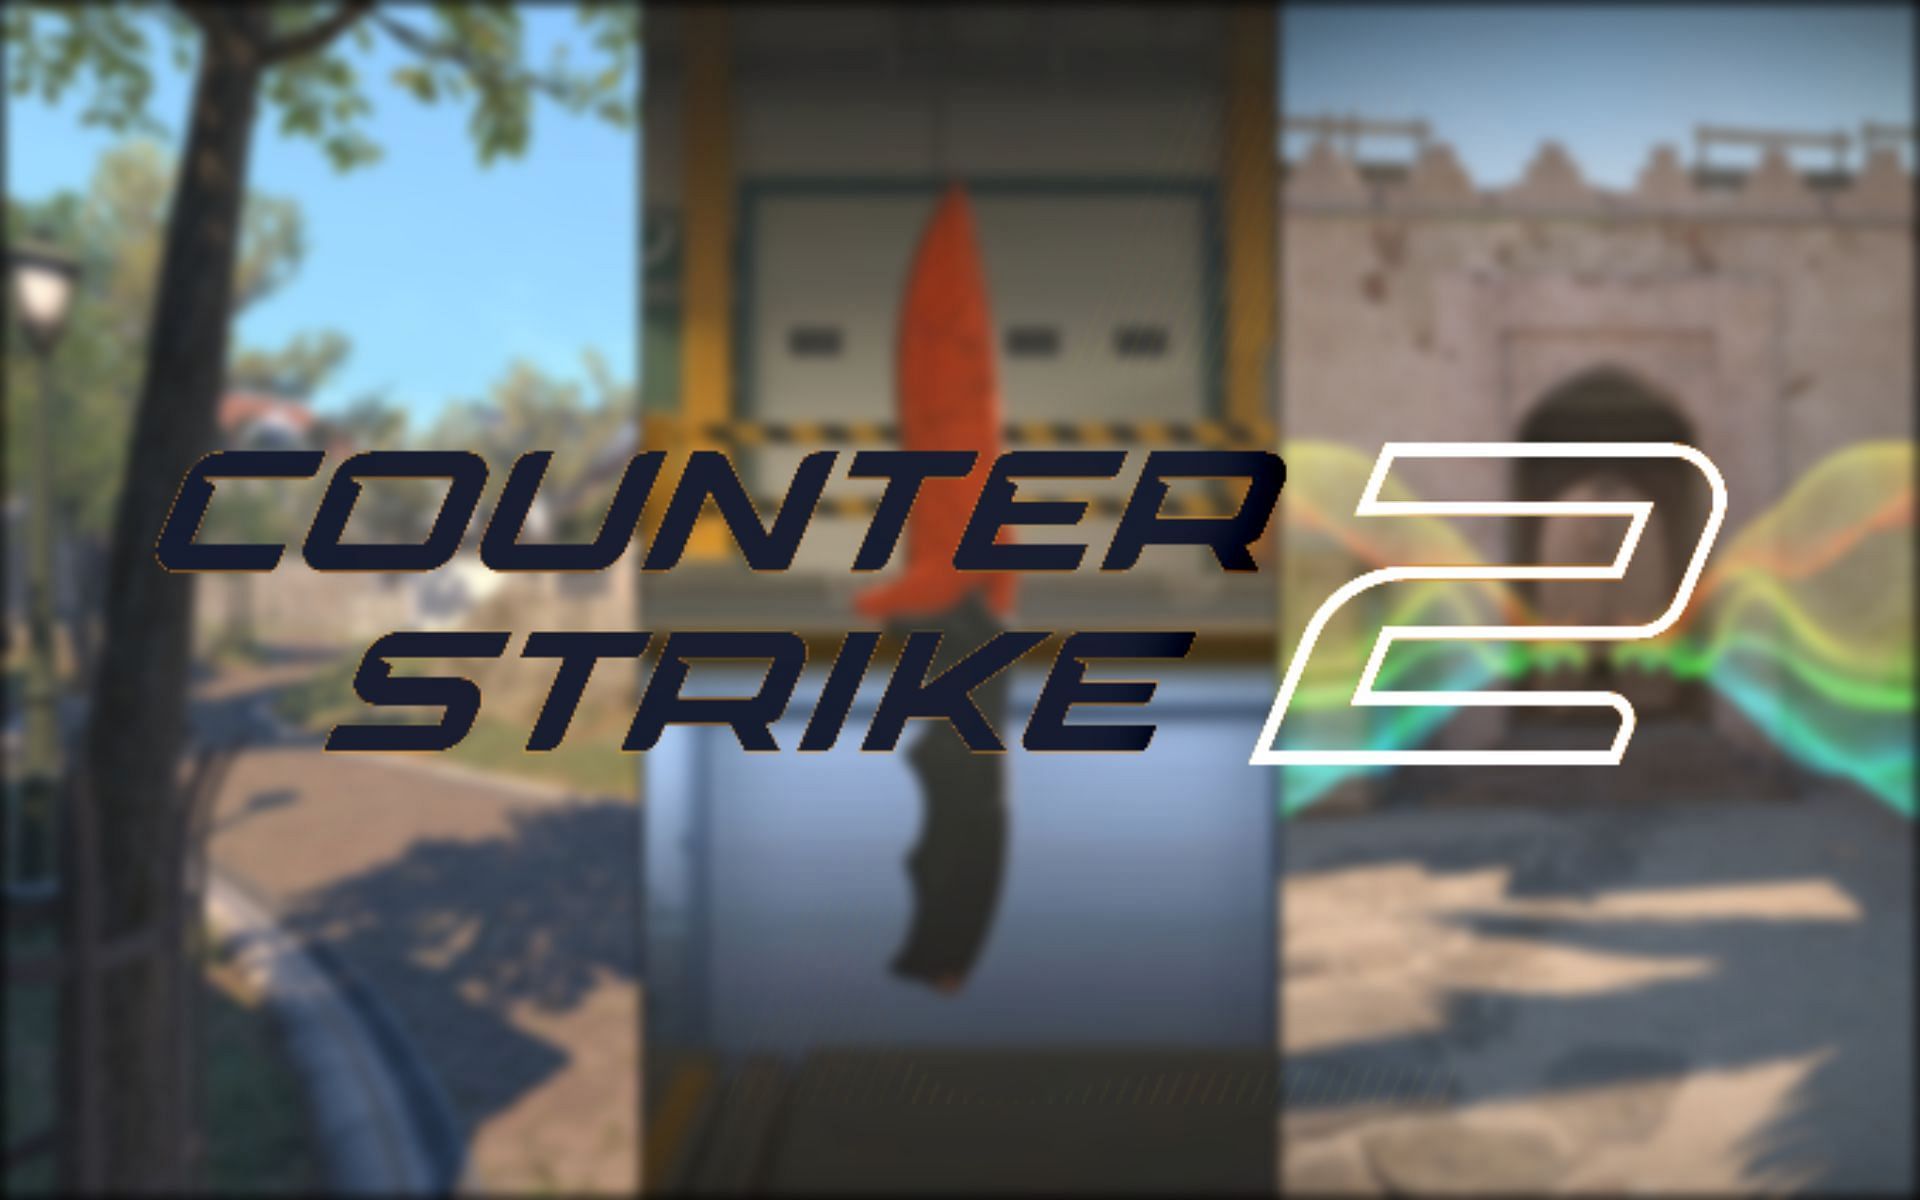 Counter Strike 2 everything we know so far (Image via Sportskeeda)